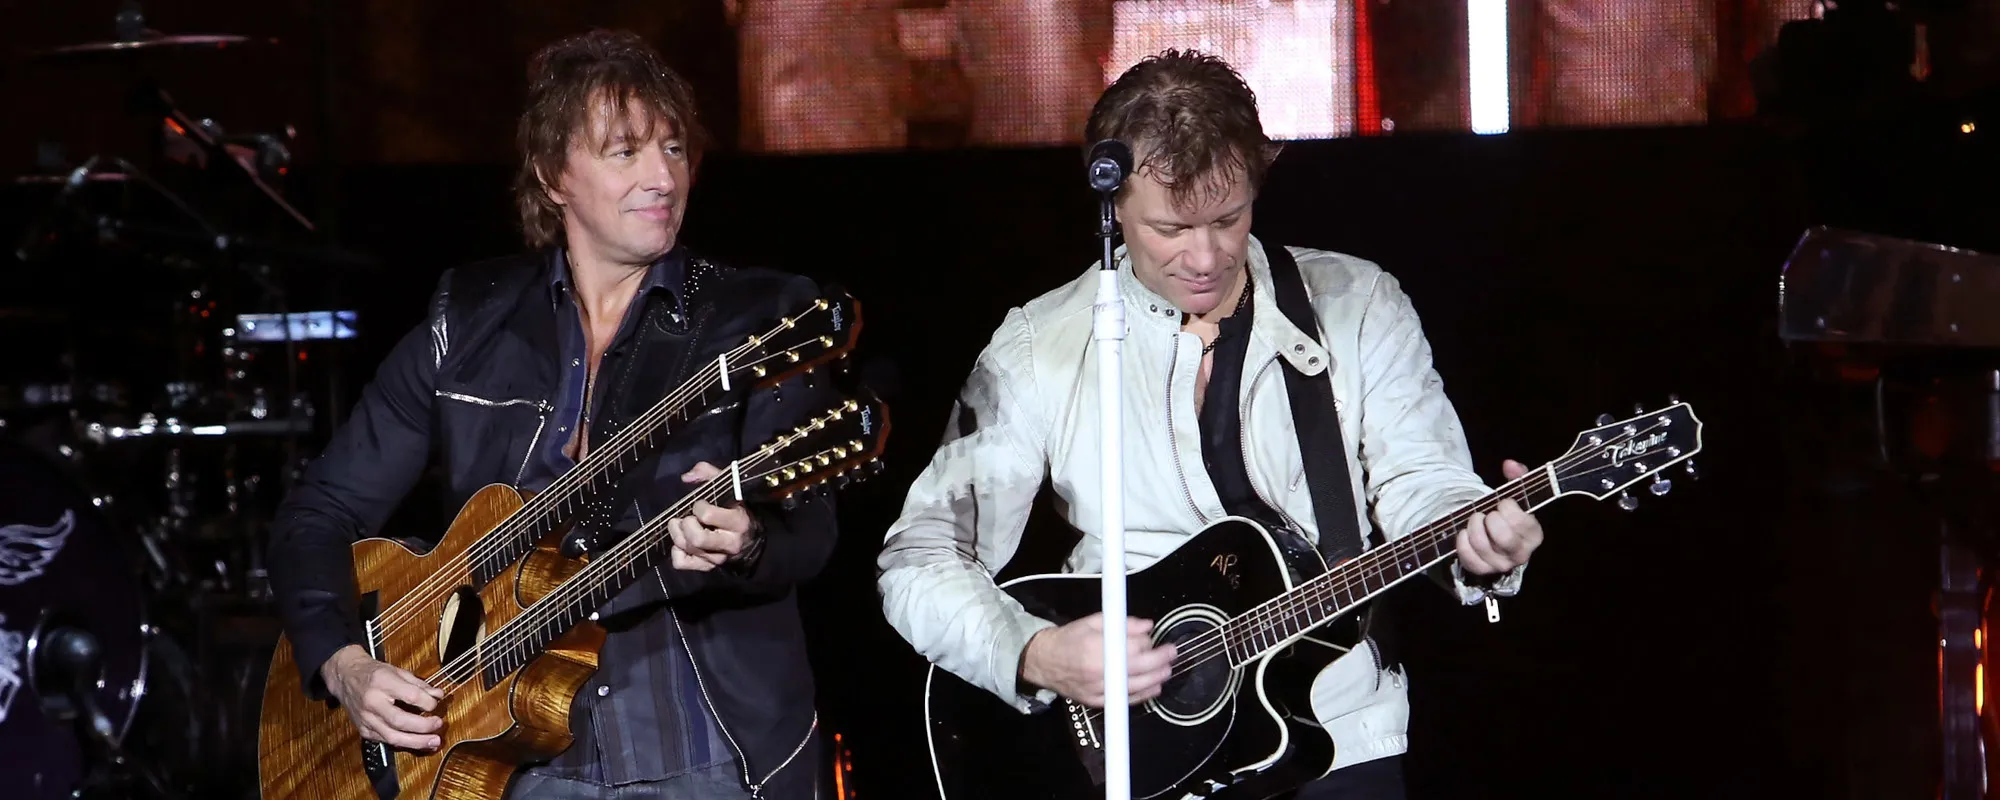 Bon Jovi’s Top 5 Songs Written with Richie Sambora